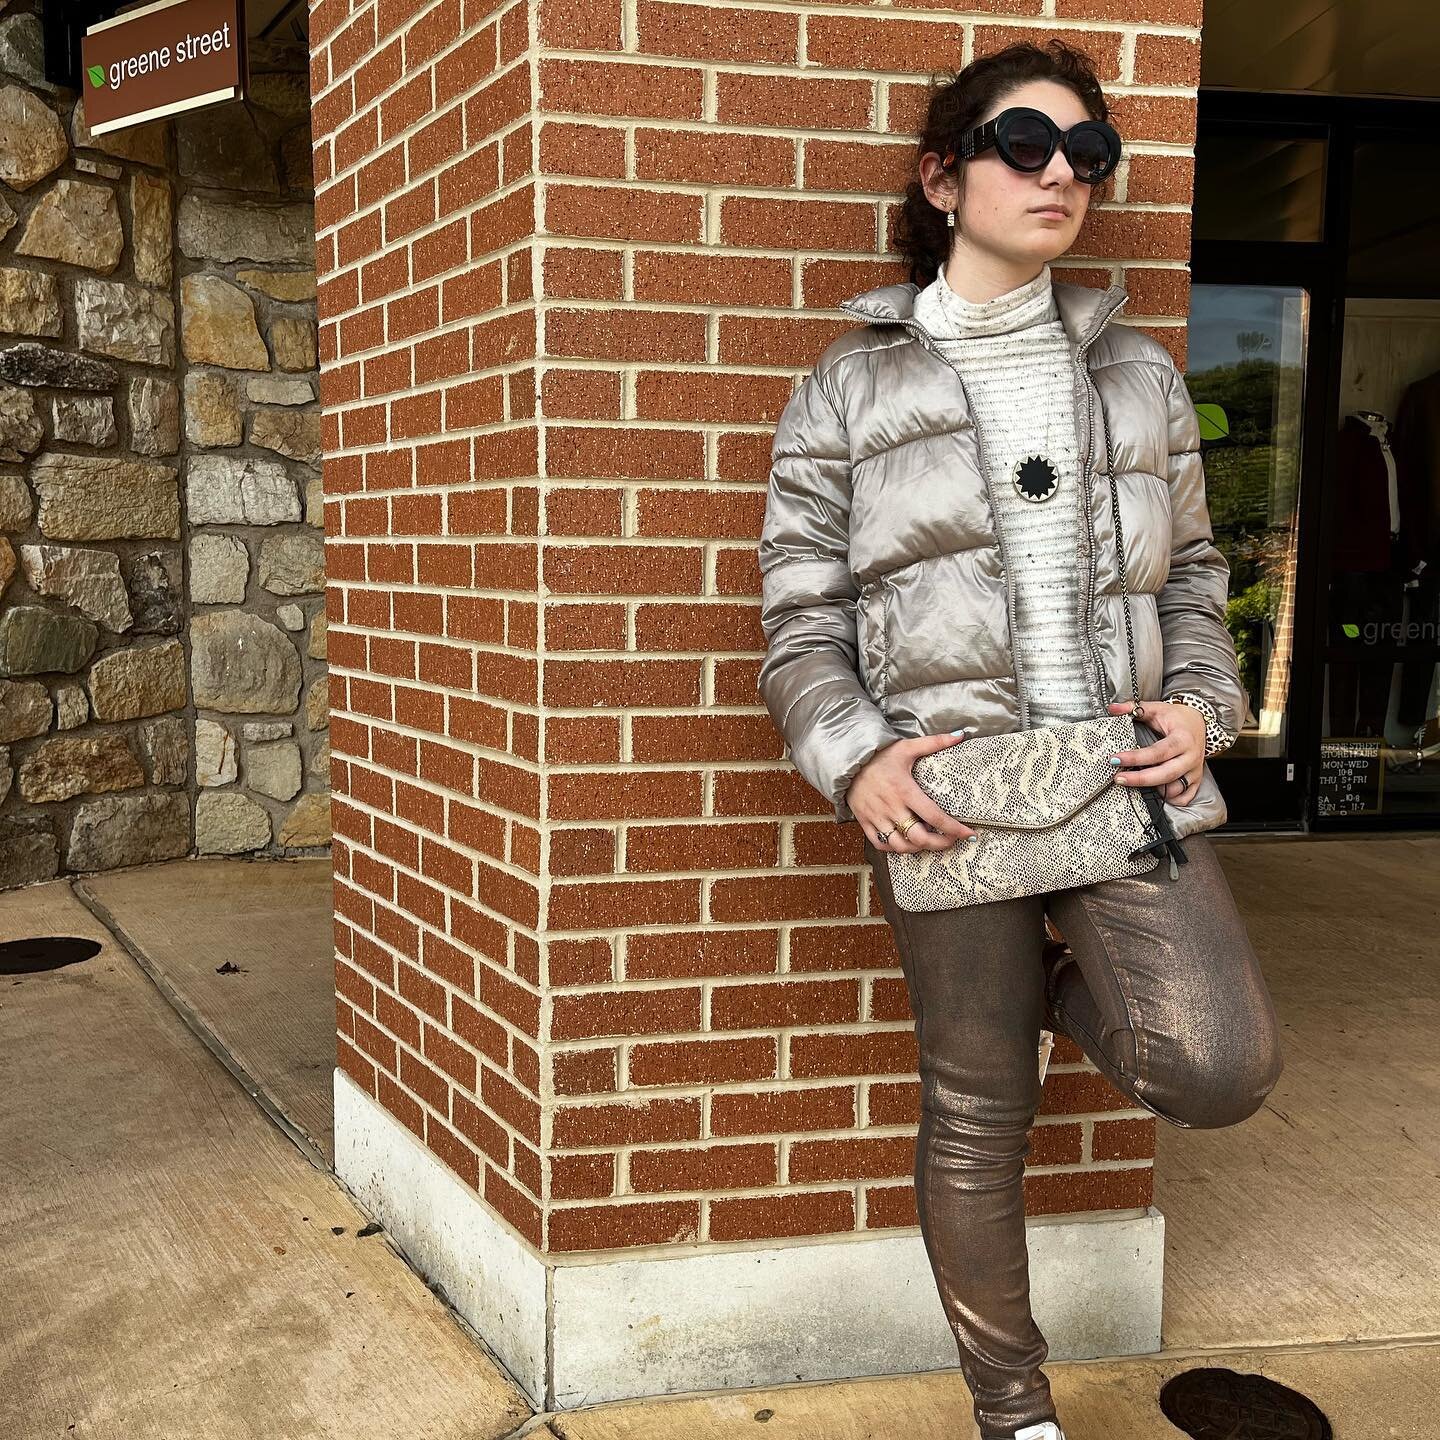 Designer Chic @greenestreetgateway 

1/ Black Retro Shades $14.95

2/ Silver Puffer Jacket Size S. $28.95

3/ Sunburst w/ Leather Center Pendant $24.95

4/ White Marked Mockneck Sweater Size: XS $22.95

5/ Rosegold Slim Leg Jean 
Size 31 $18.95

6/ S